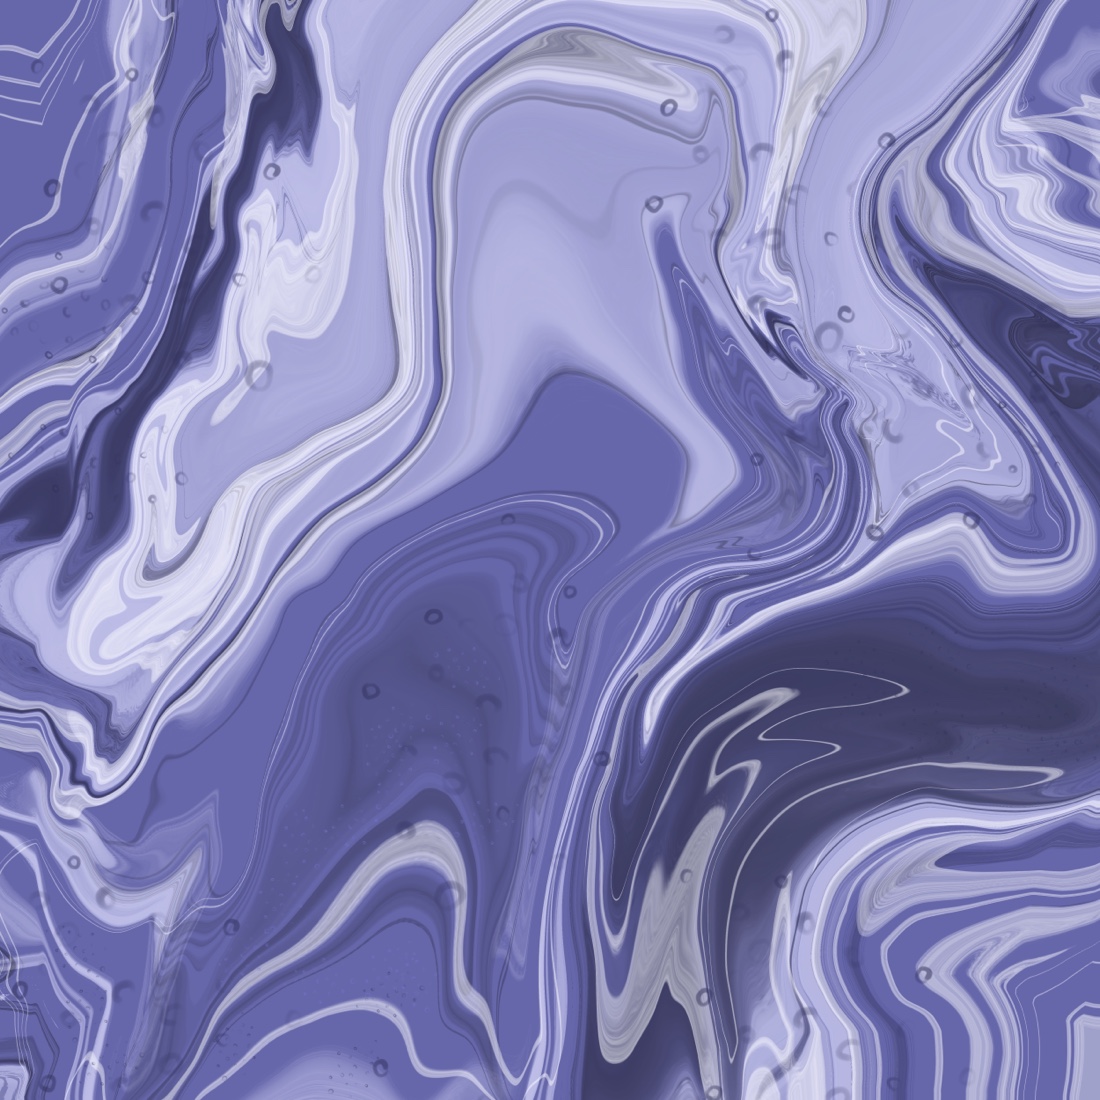 Purple Marble Texture Backgrounds previews.